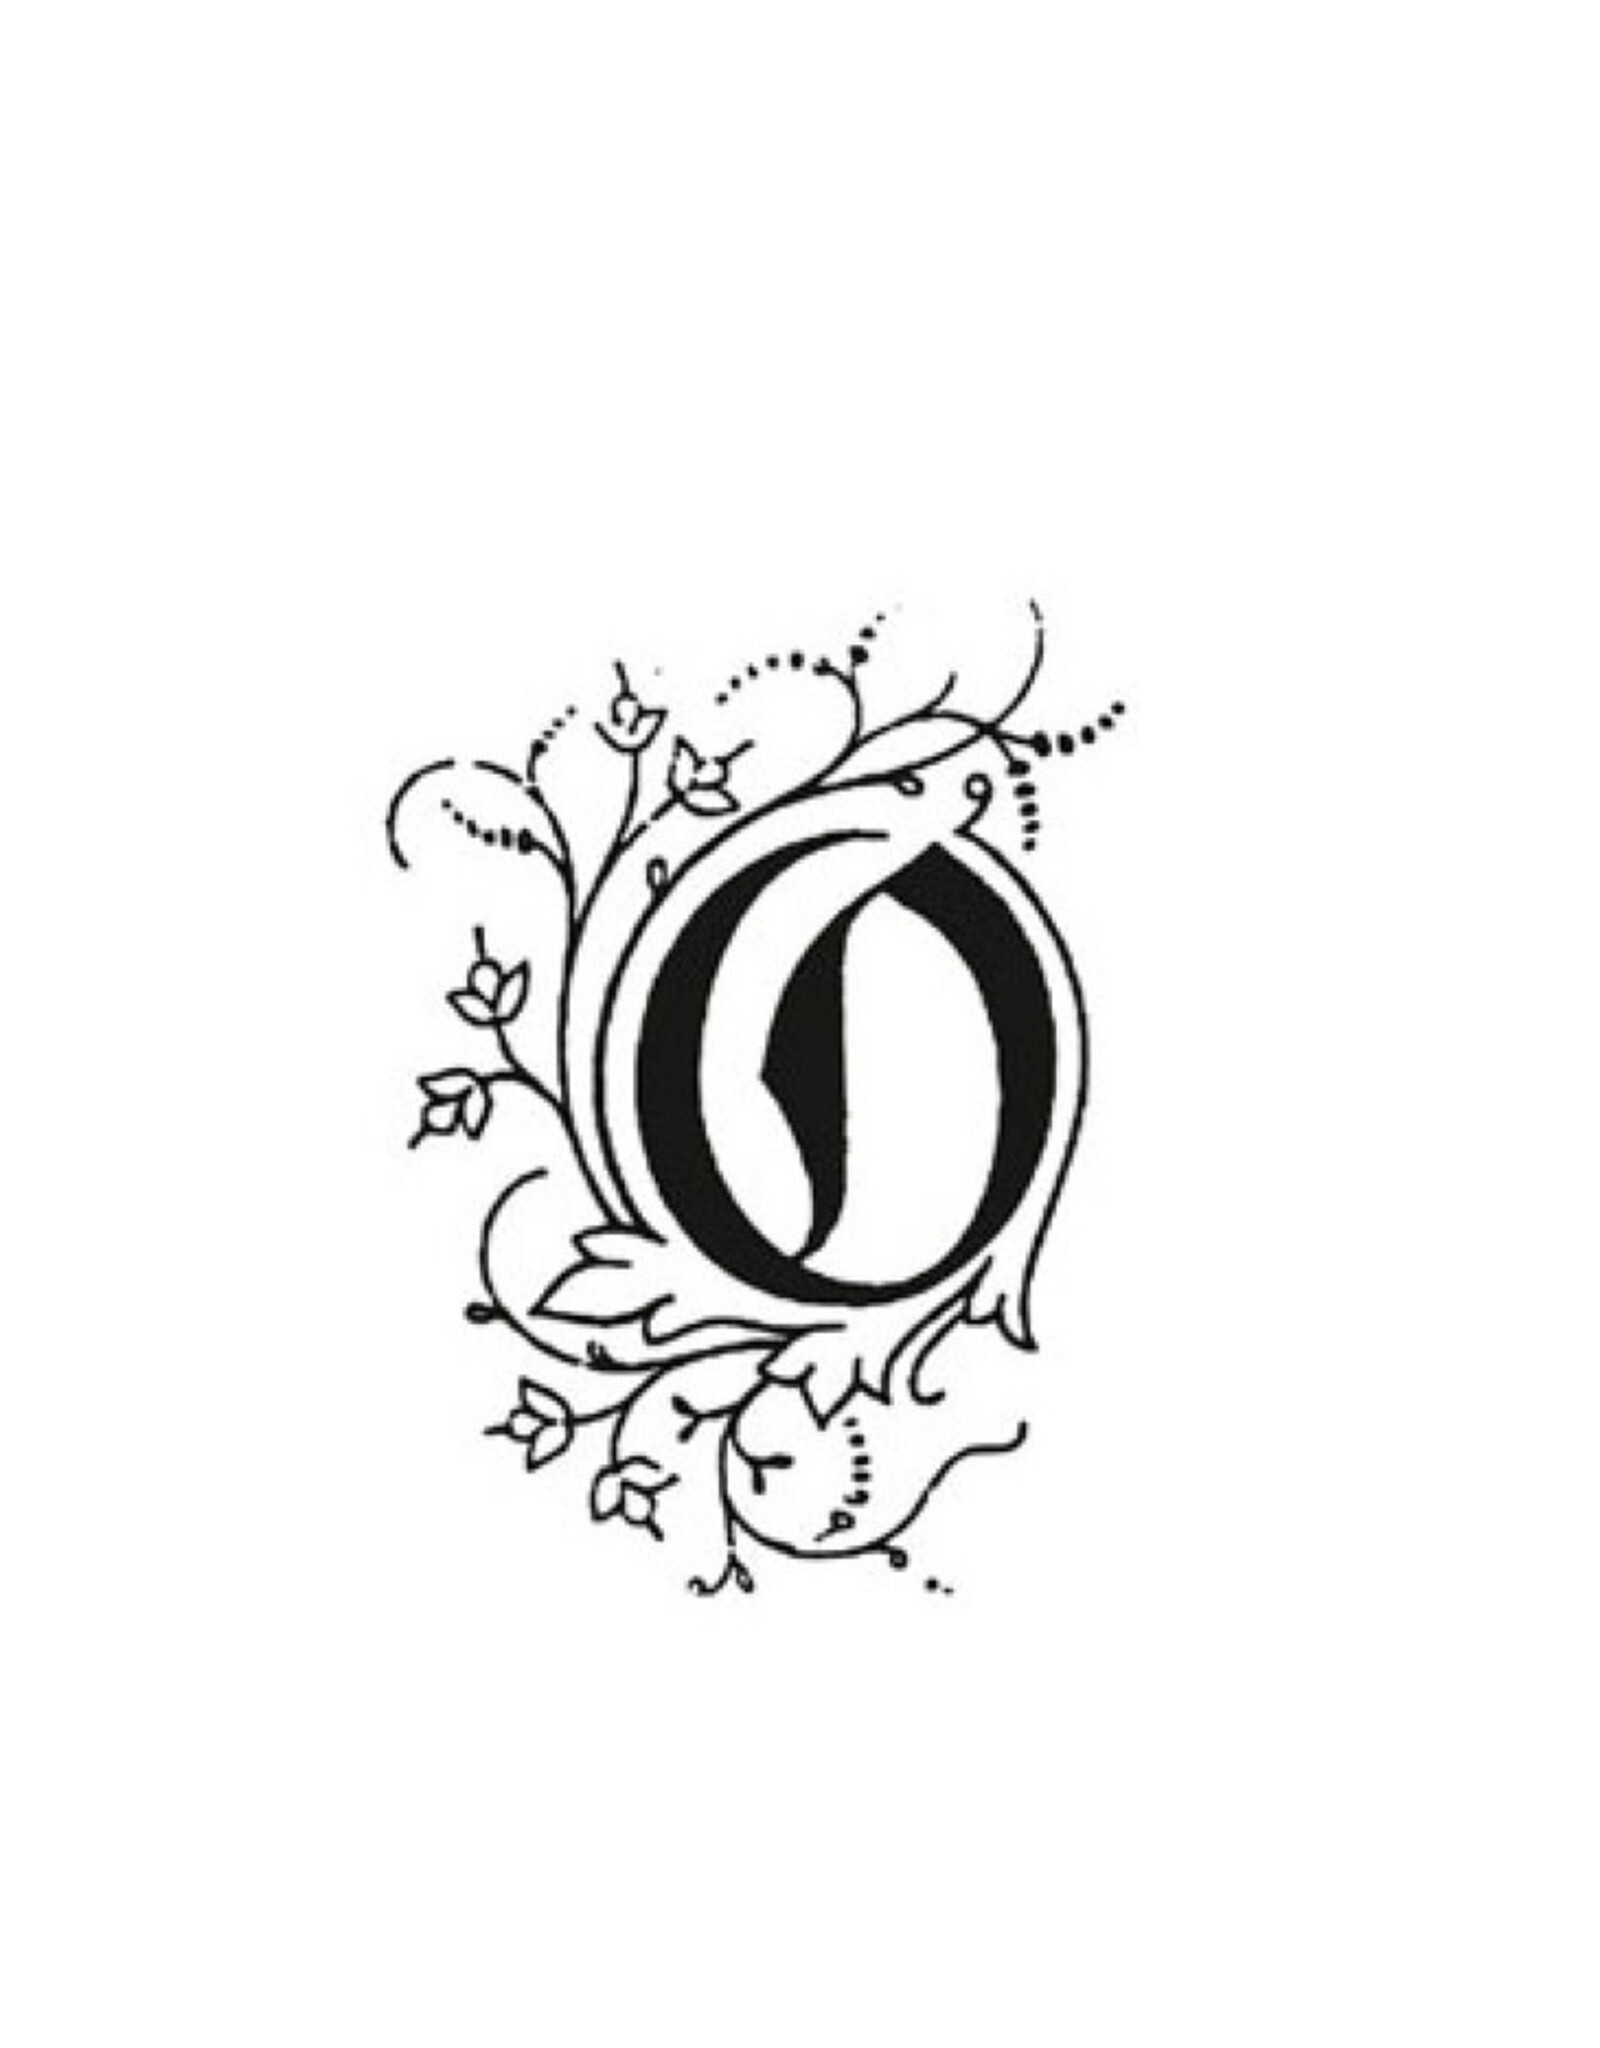 J. Herbin "O" Illuminated Letter Seal + Handle